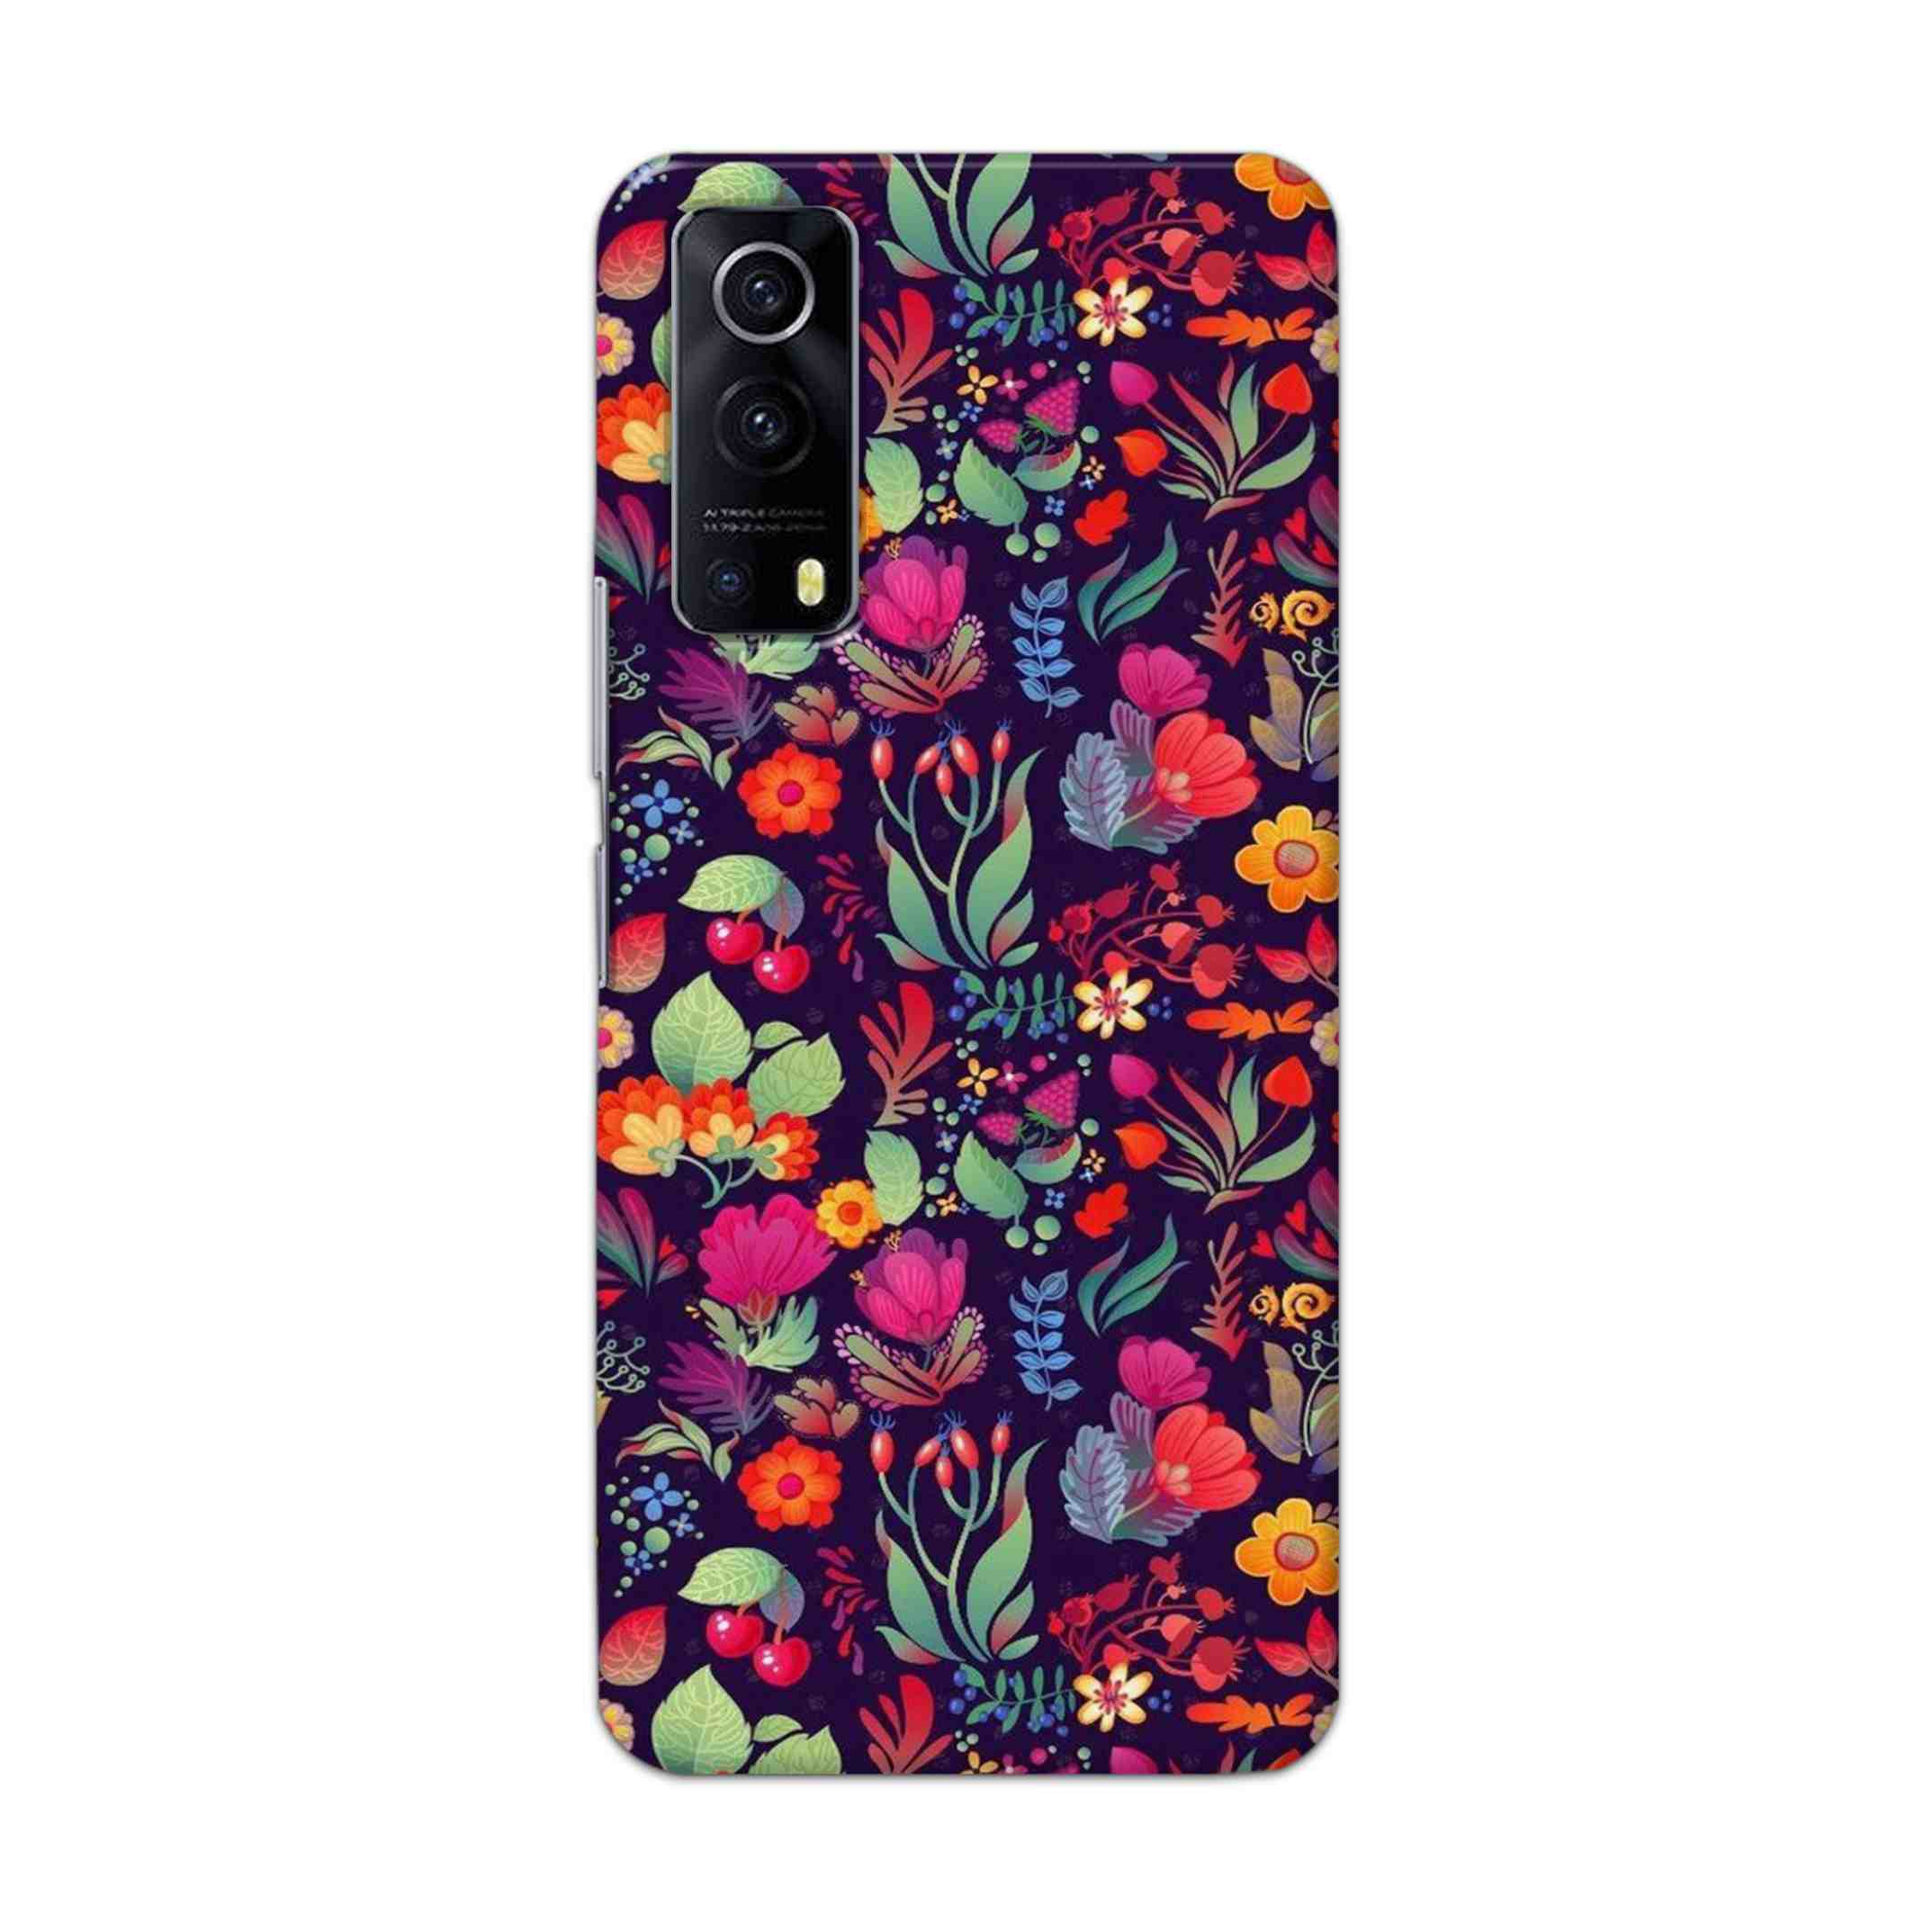 Buy Fruits Flower Hard Back Mobile Phone Case Cover For Vivo IQOO Z3 Online